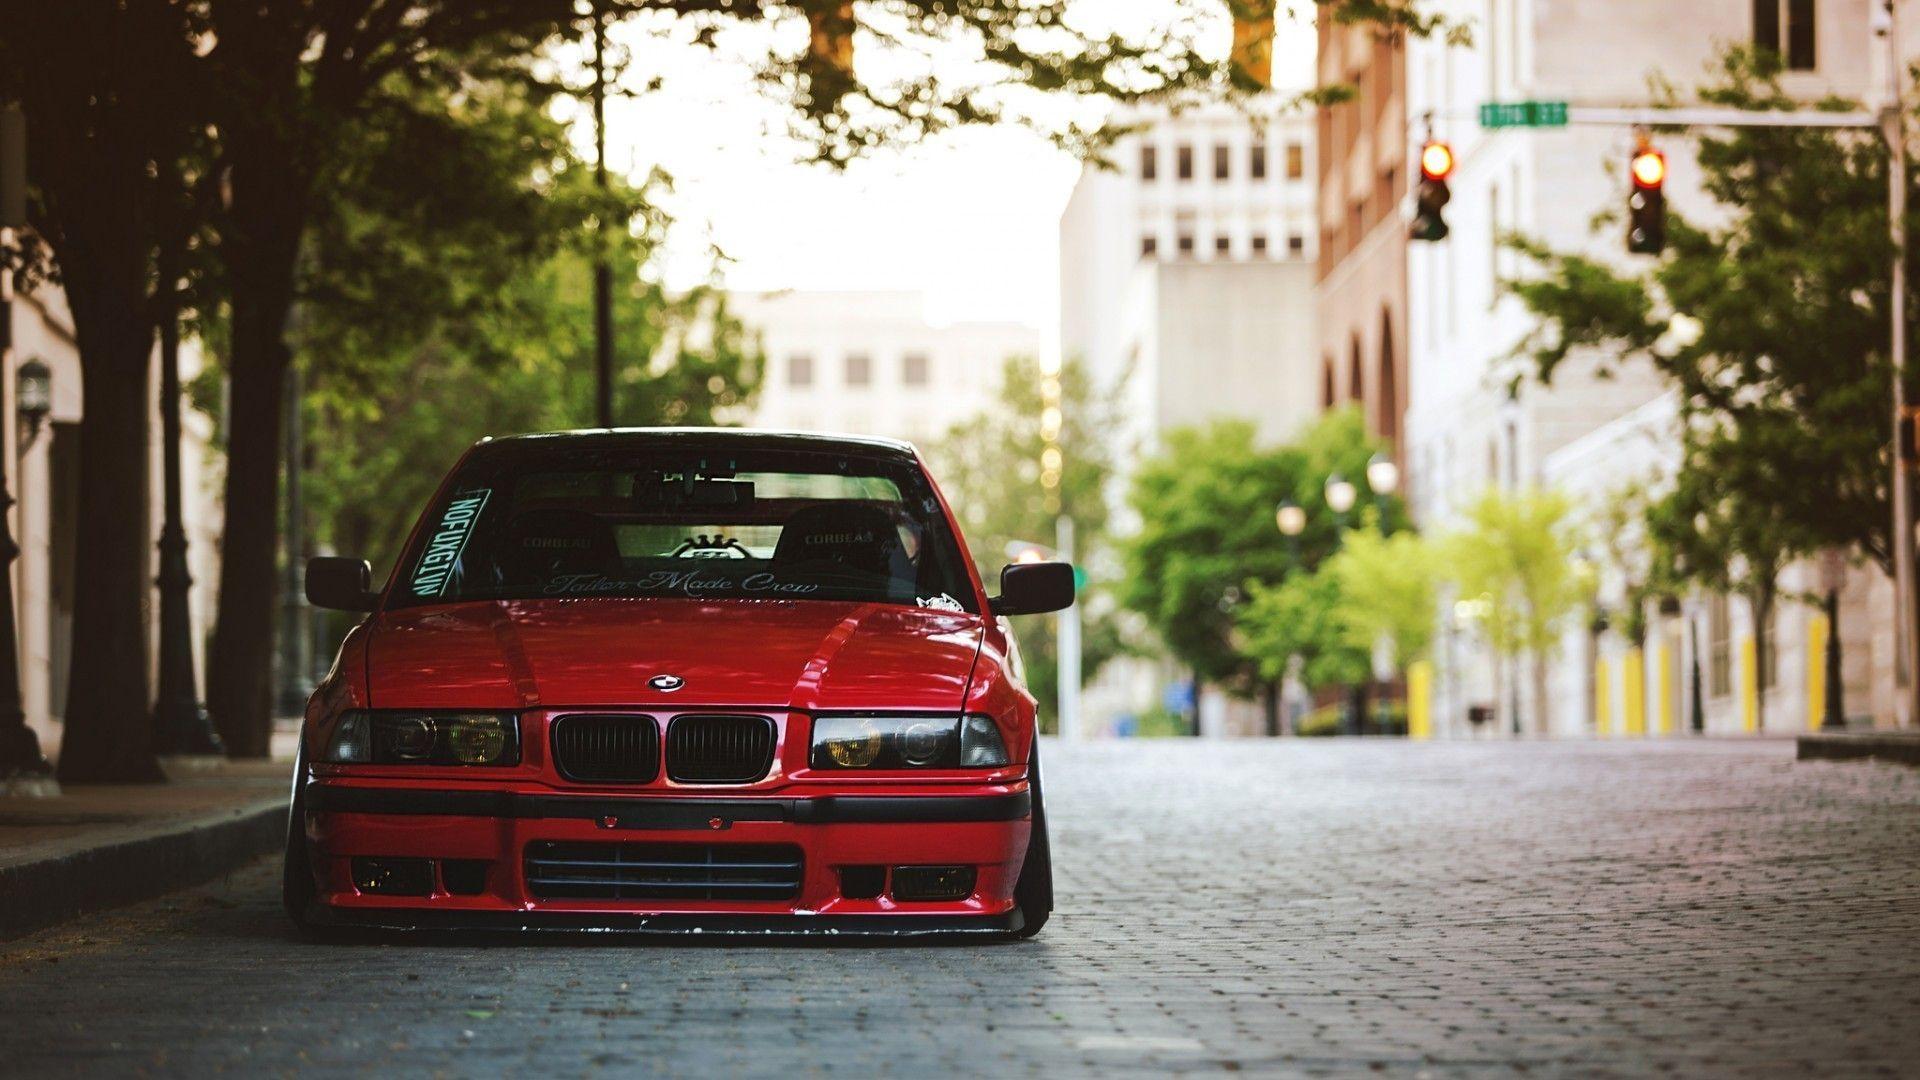 BMW E36 M3 Wallpapers